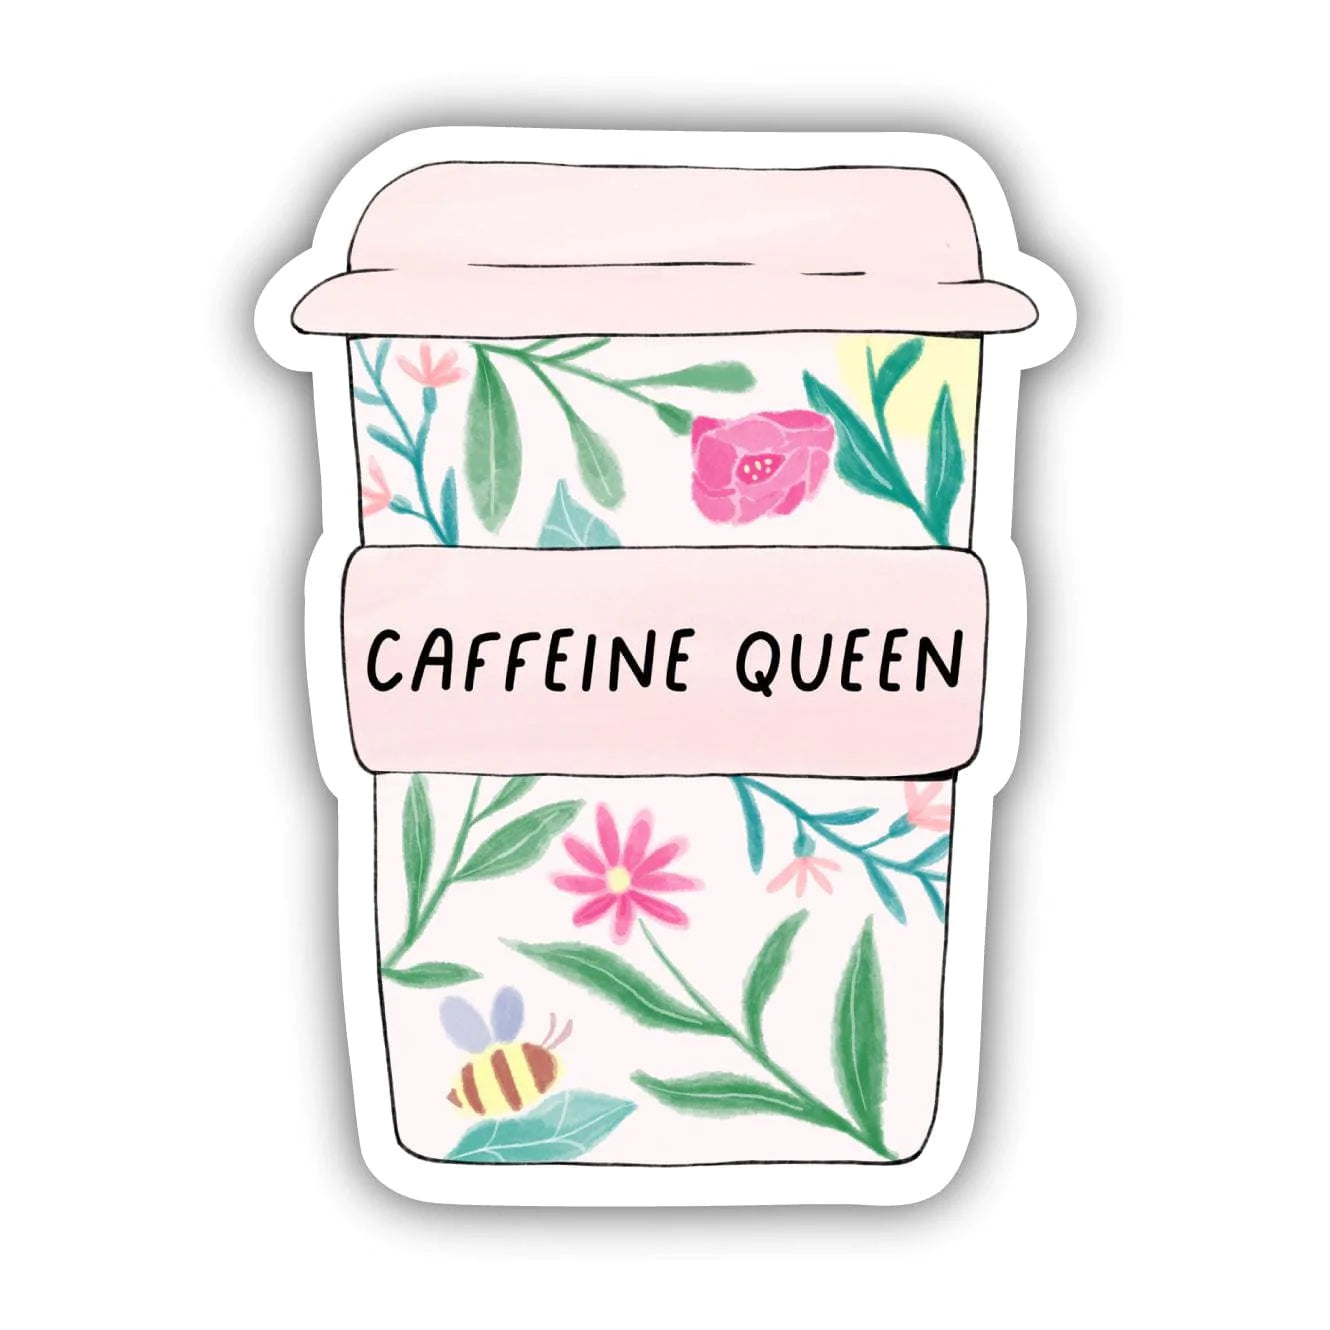 Big Moods Caffeine Queen Floral Mug Sticker - Multicolor